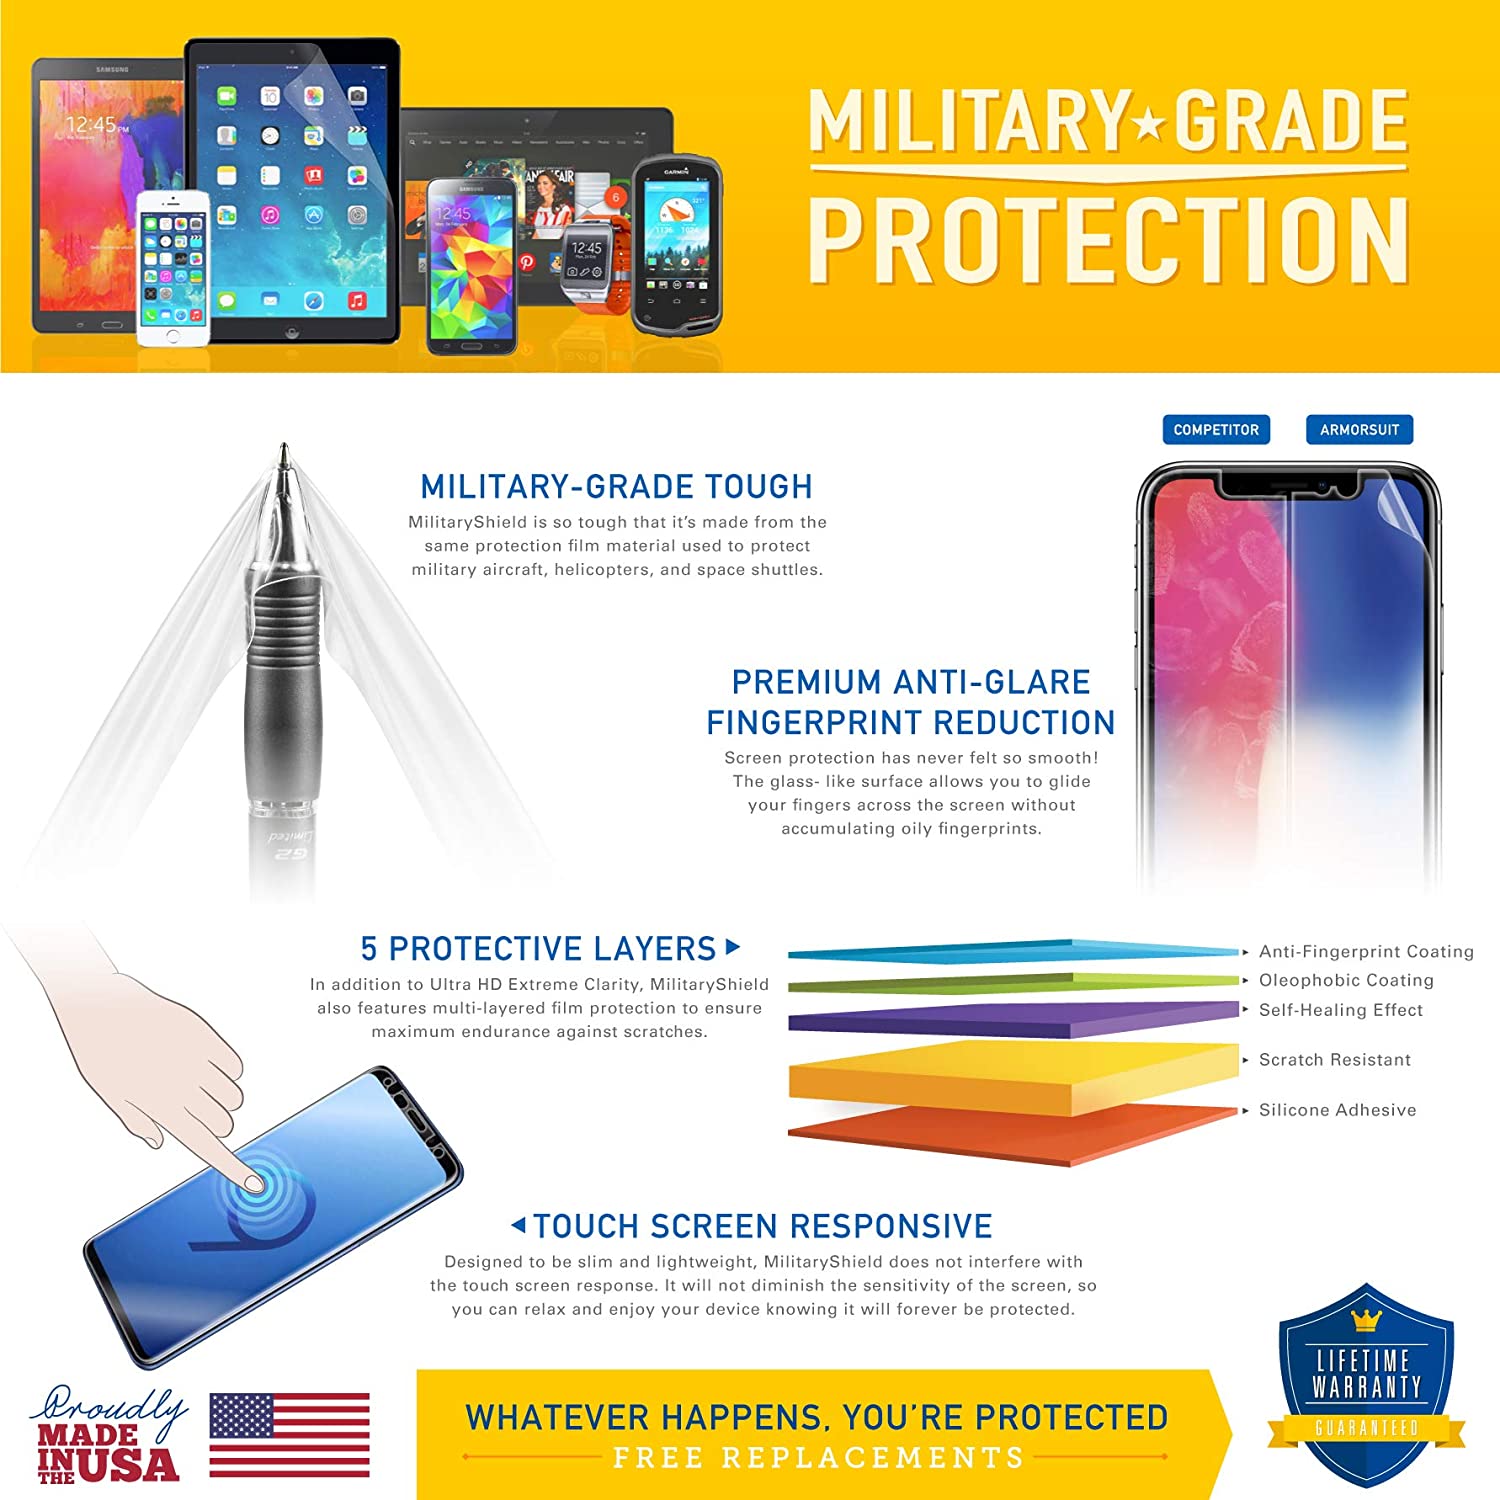 Samsung Galaxy Tab A 9.7" Anti-Glare (Matte) Screen Protector